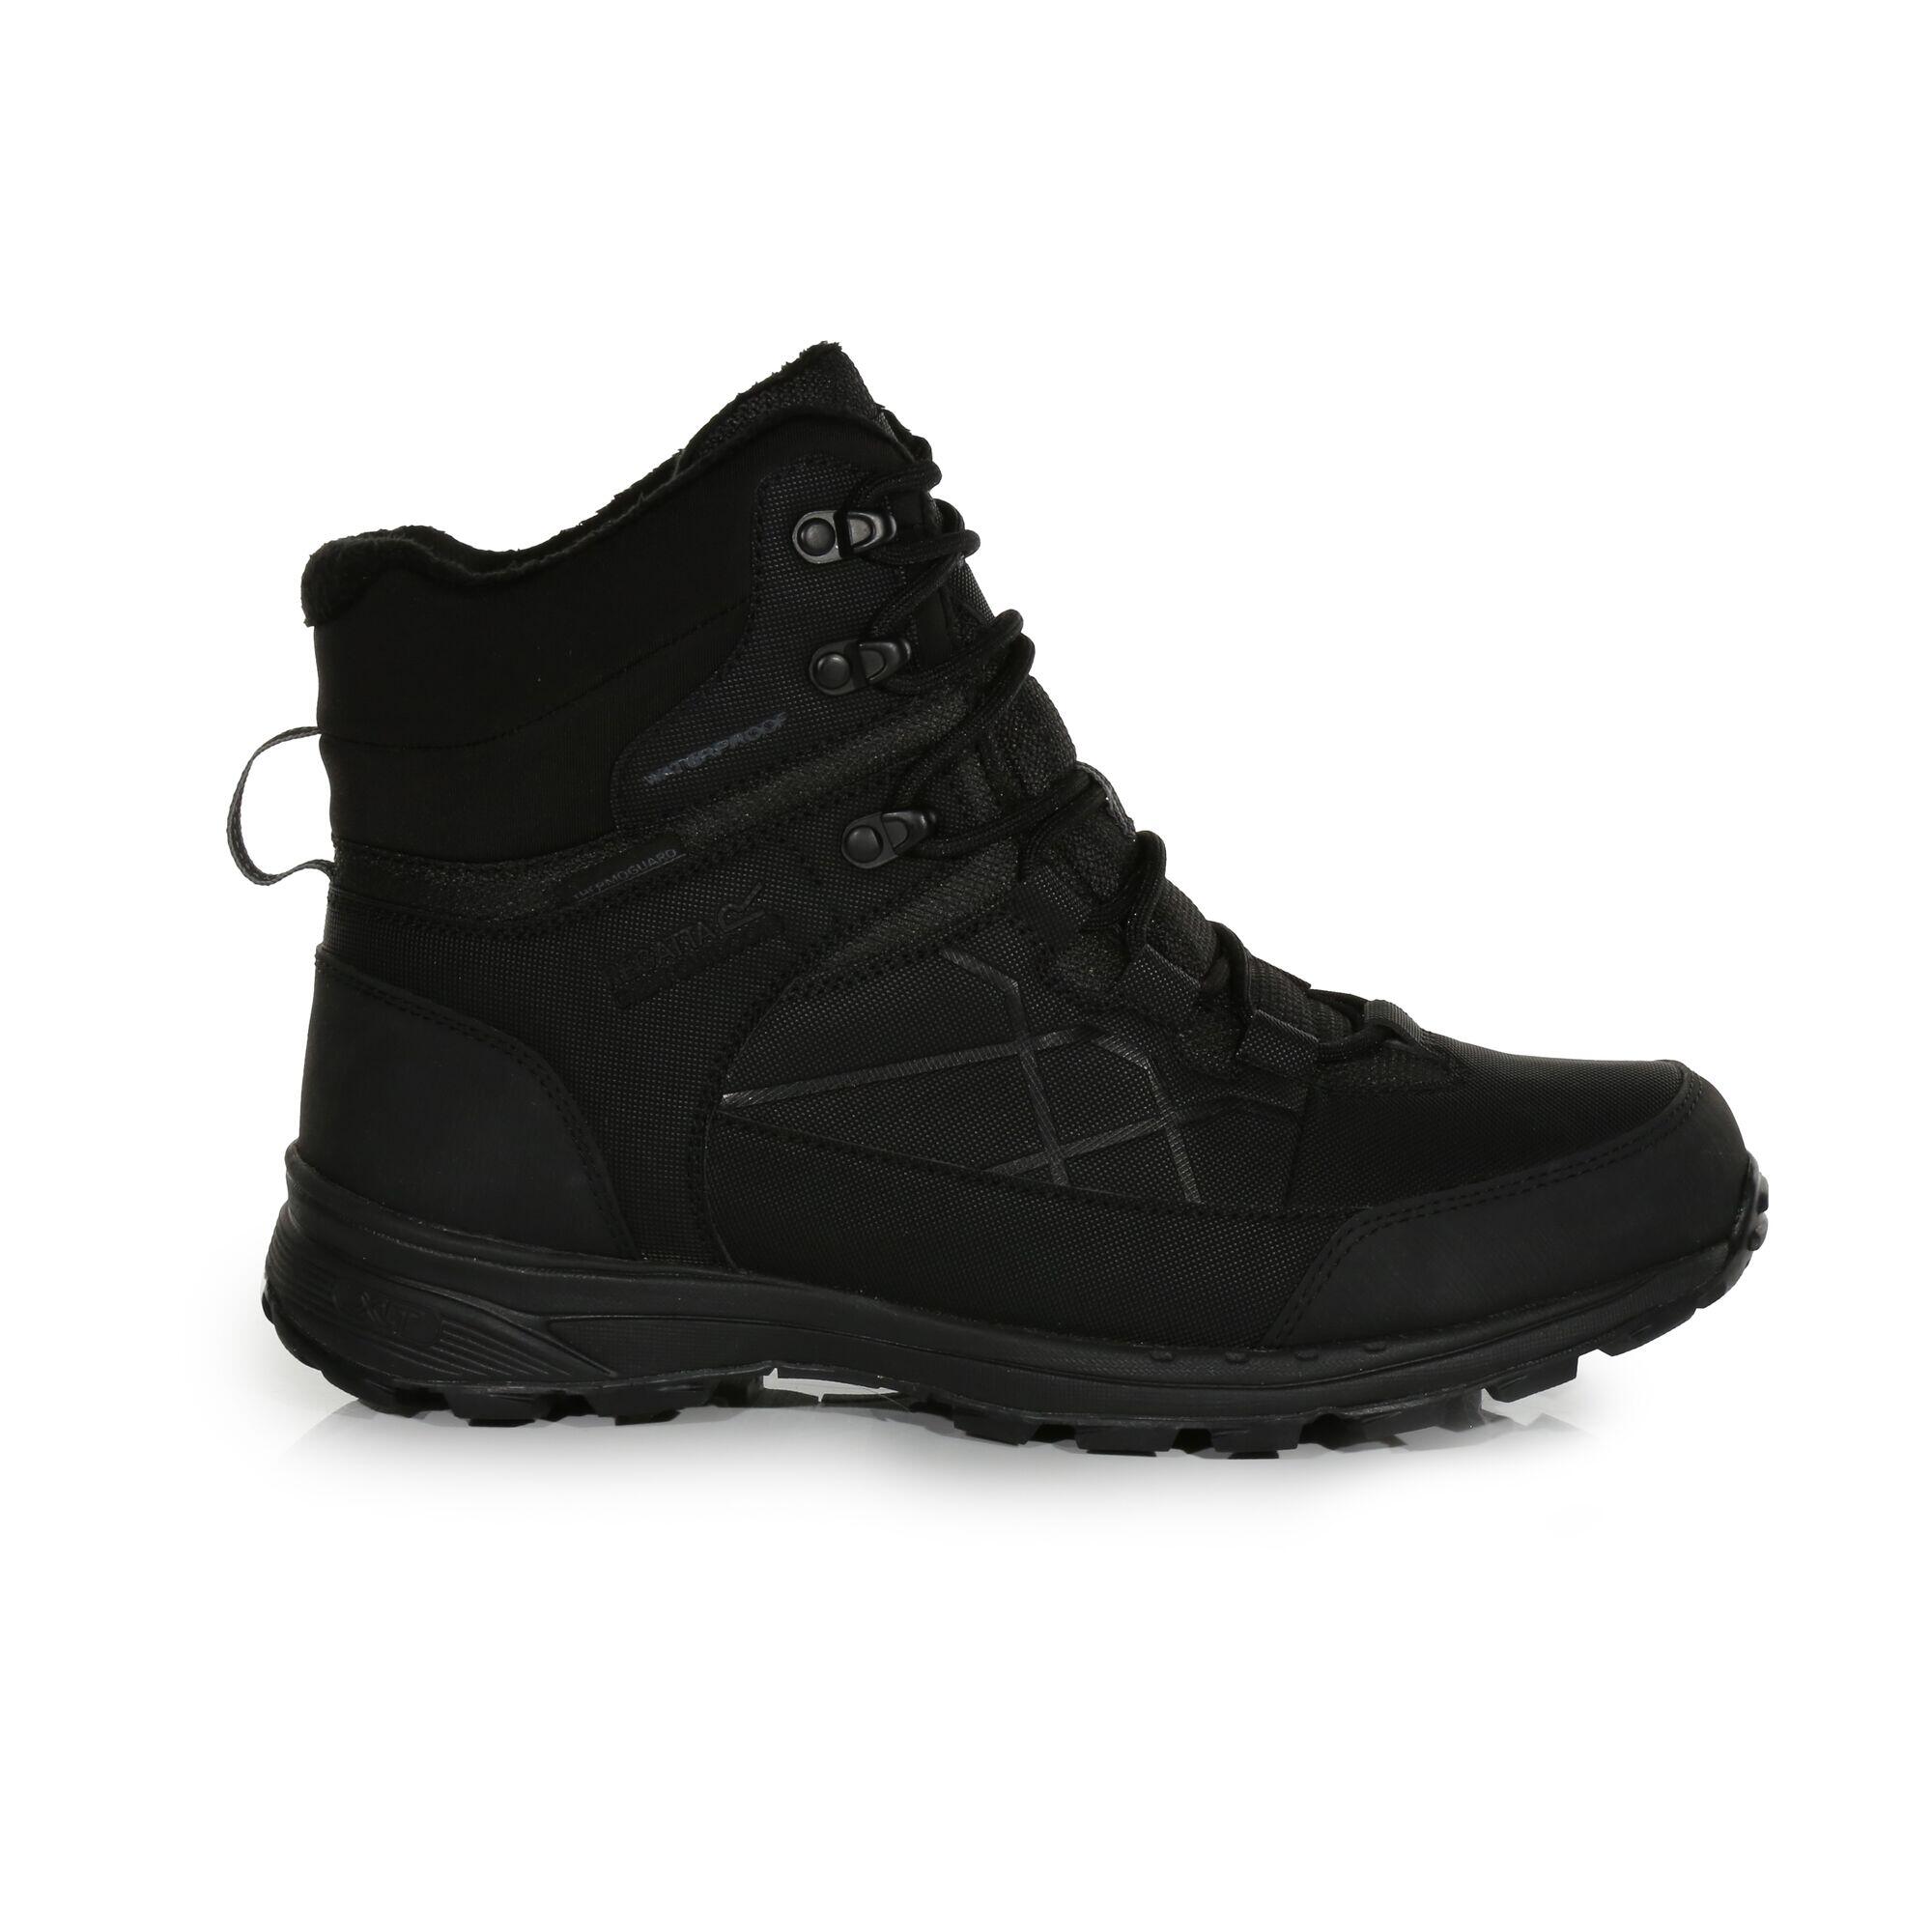 REGATTA Samaris Men's Hiking Thermo Insulation Boots - Black